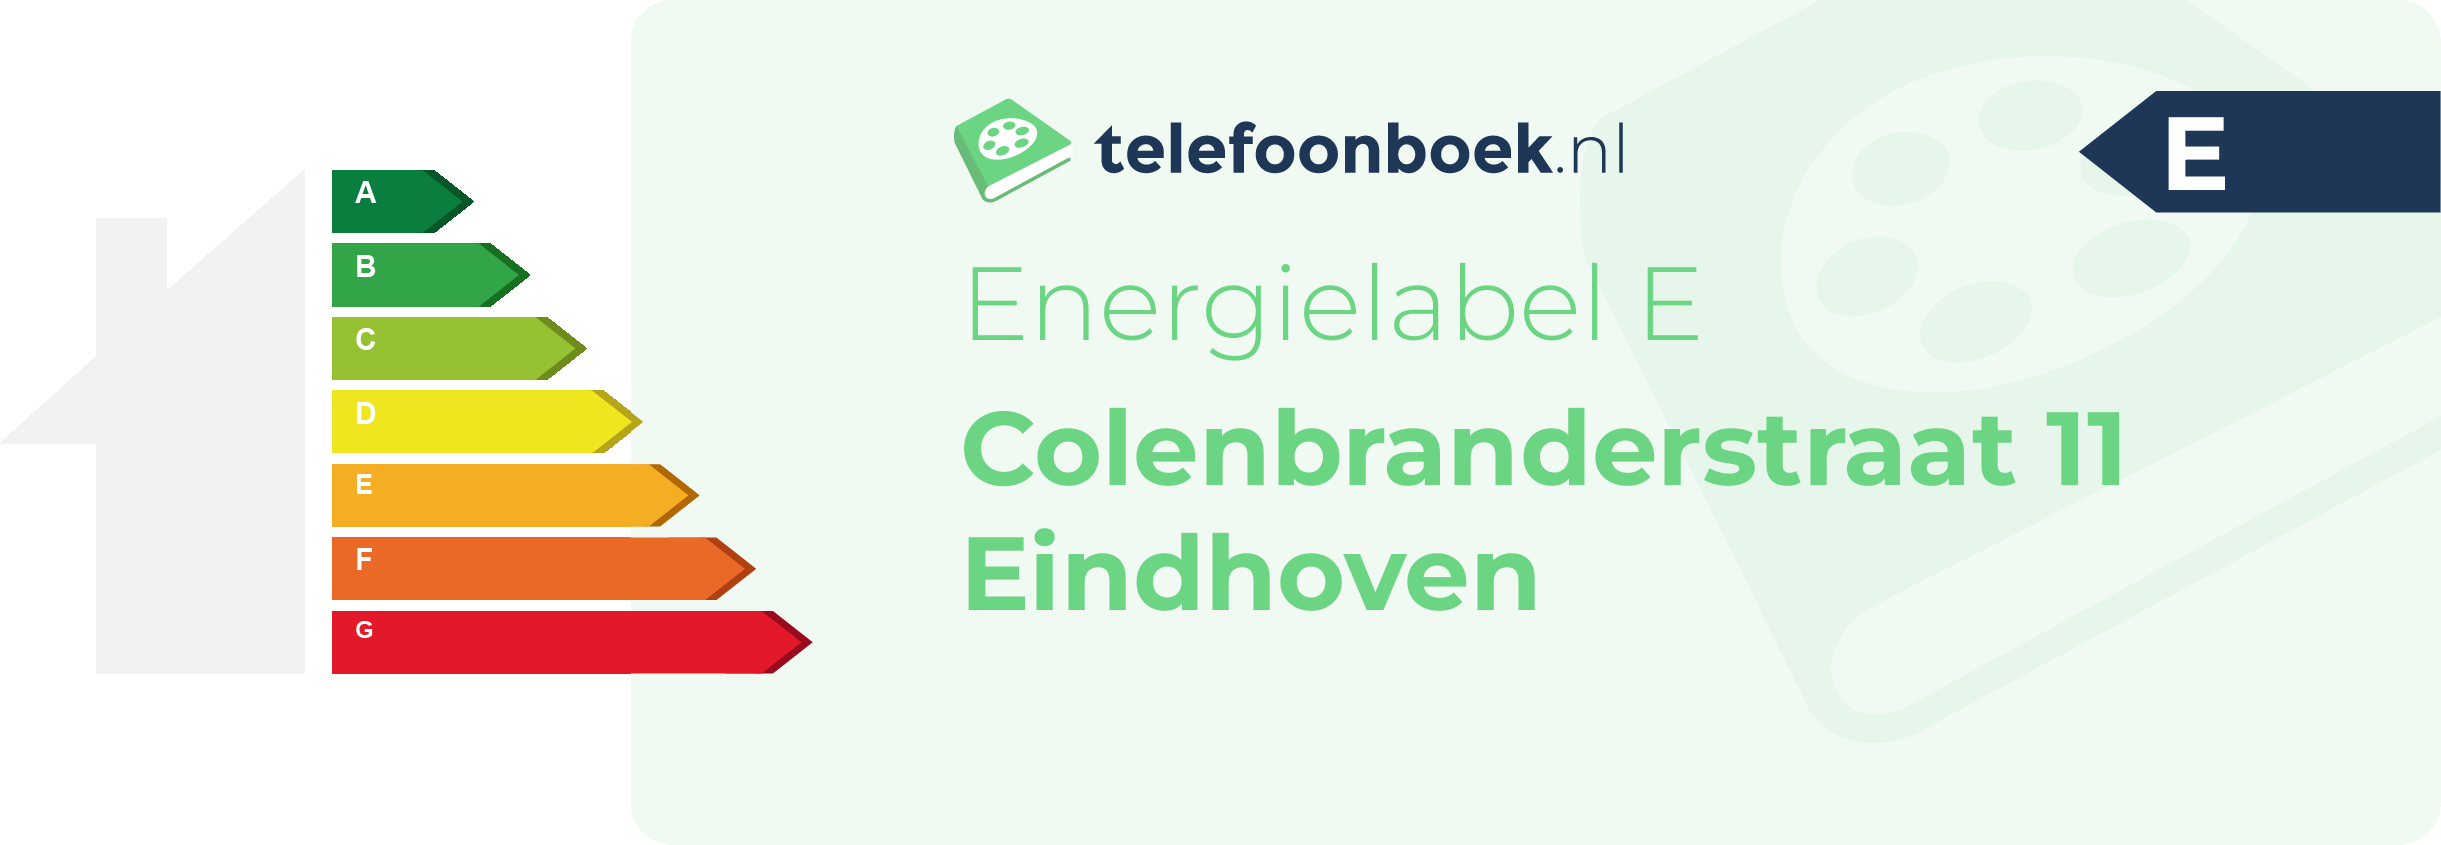 Energielabel Colenbranderstraat 11 Eindhoven